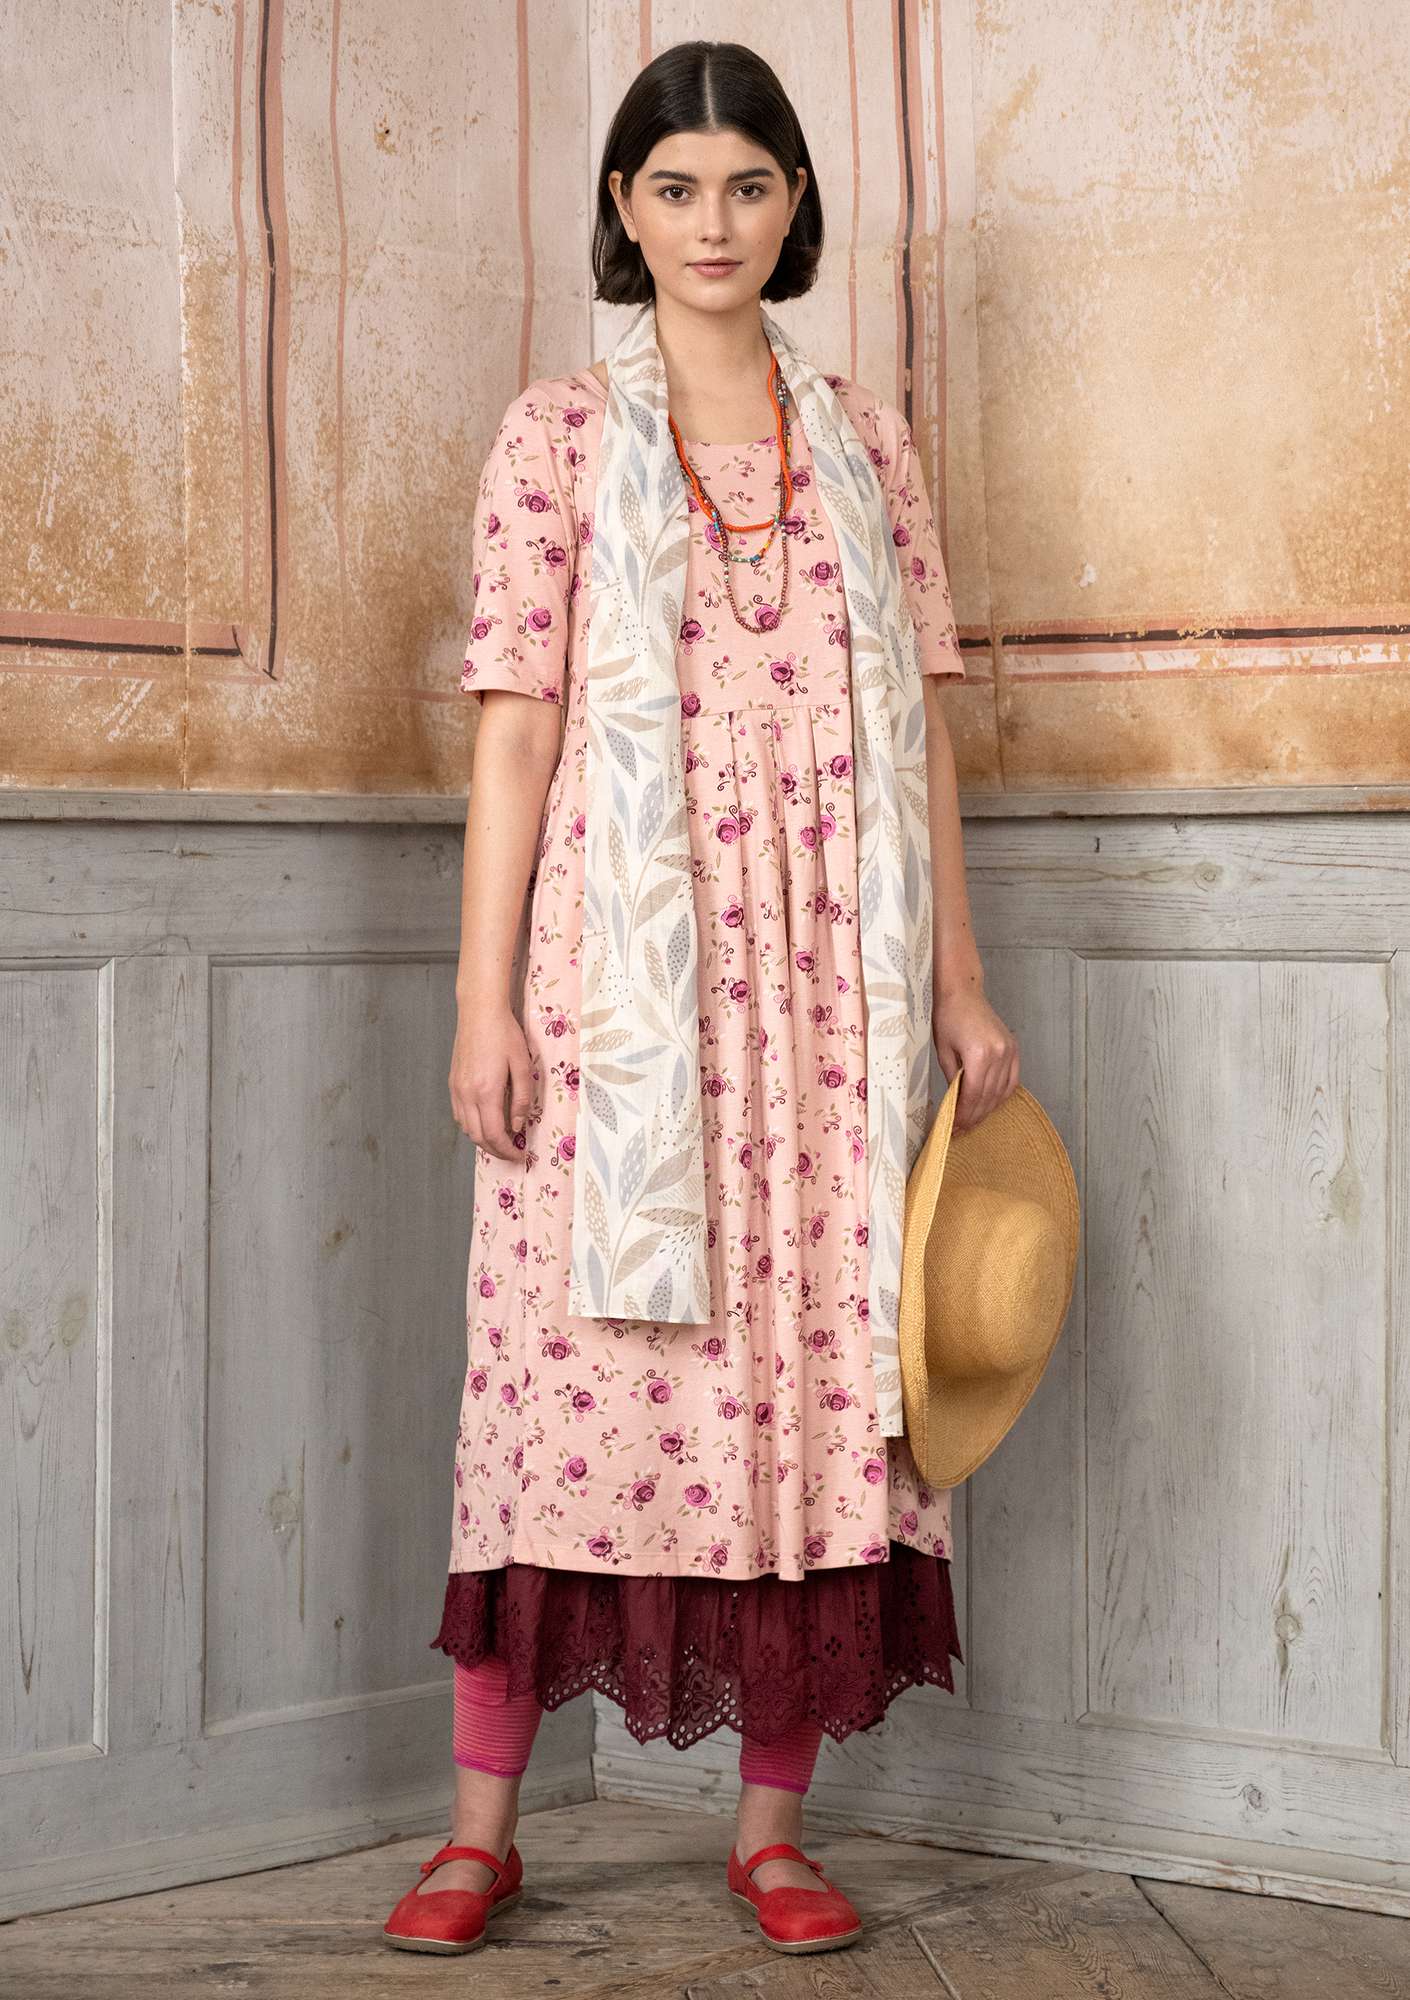 “Sofia” jersey dress in organic cotton/modal dusky pink